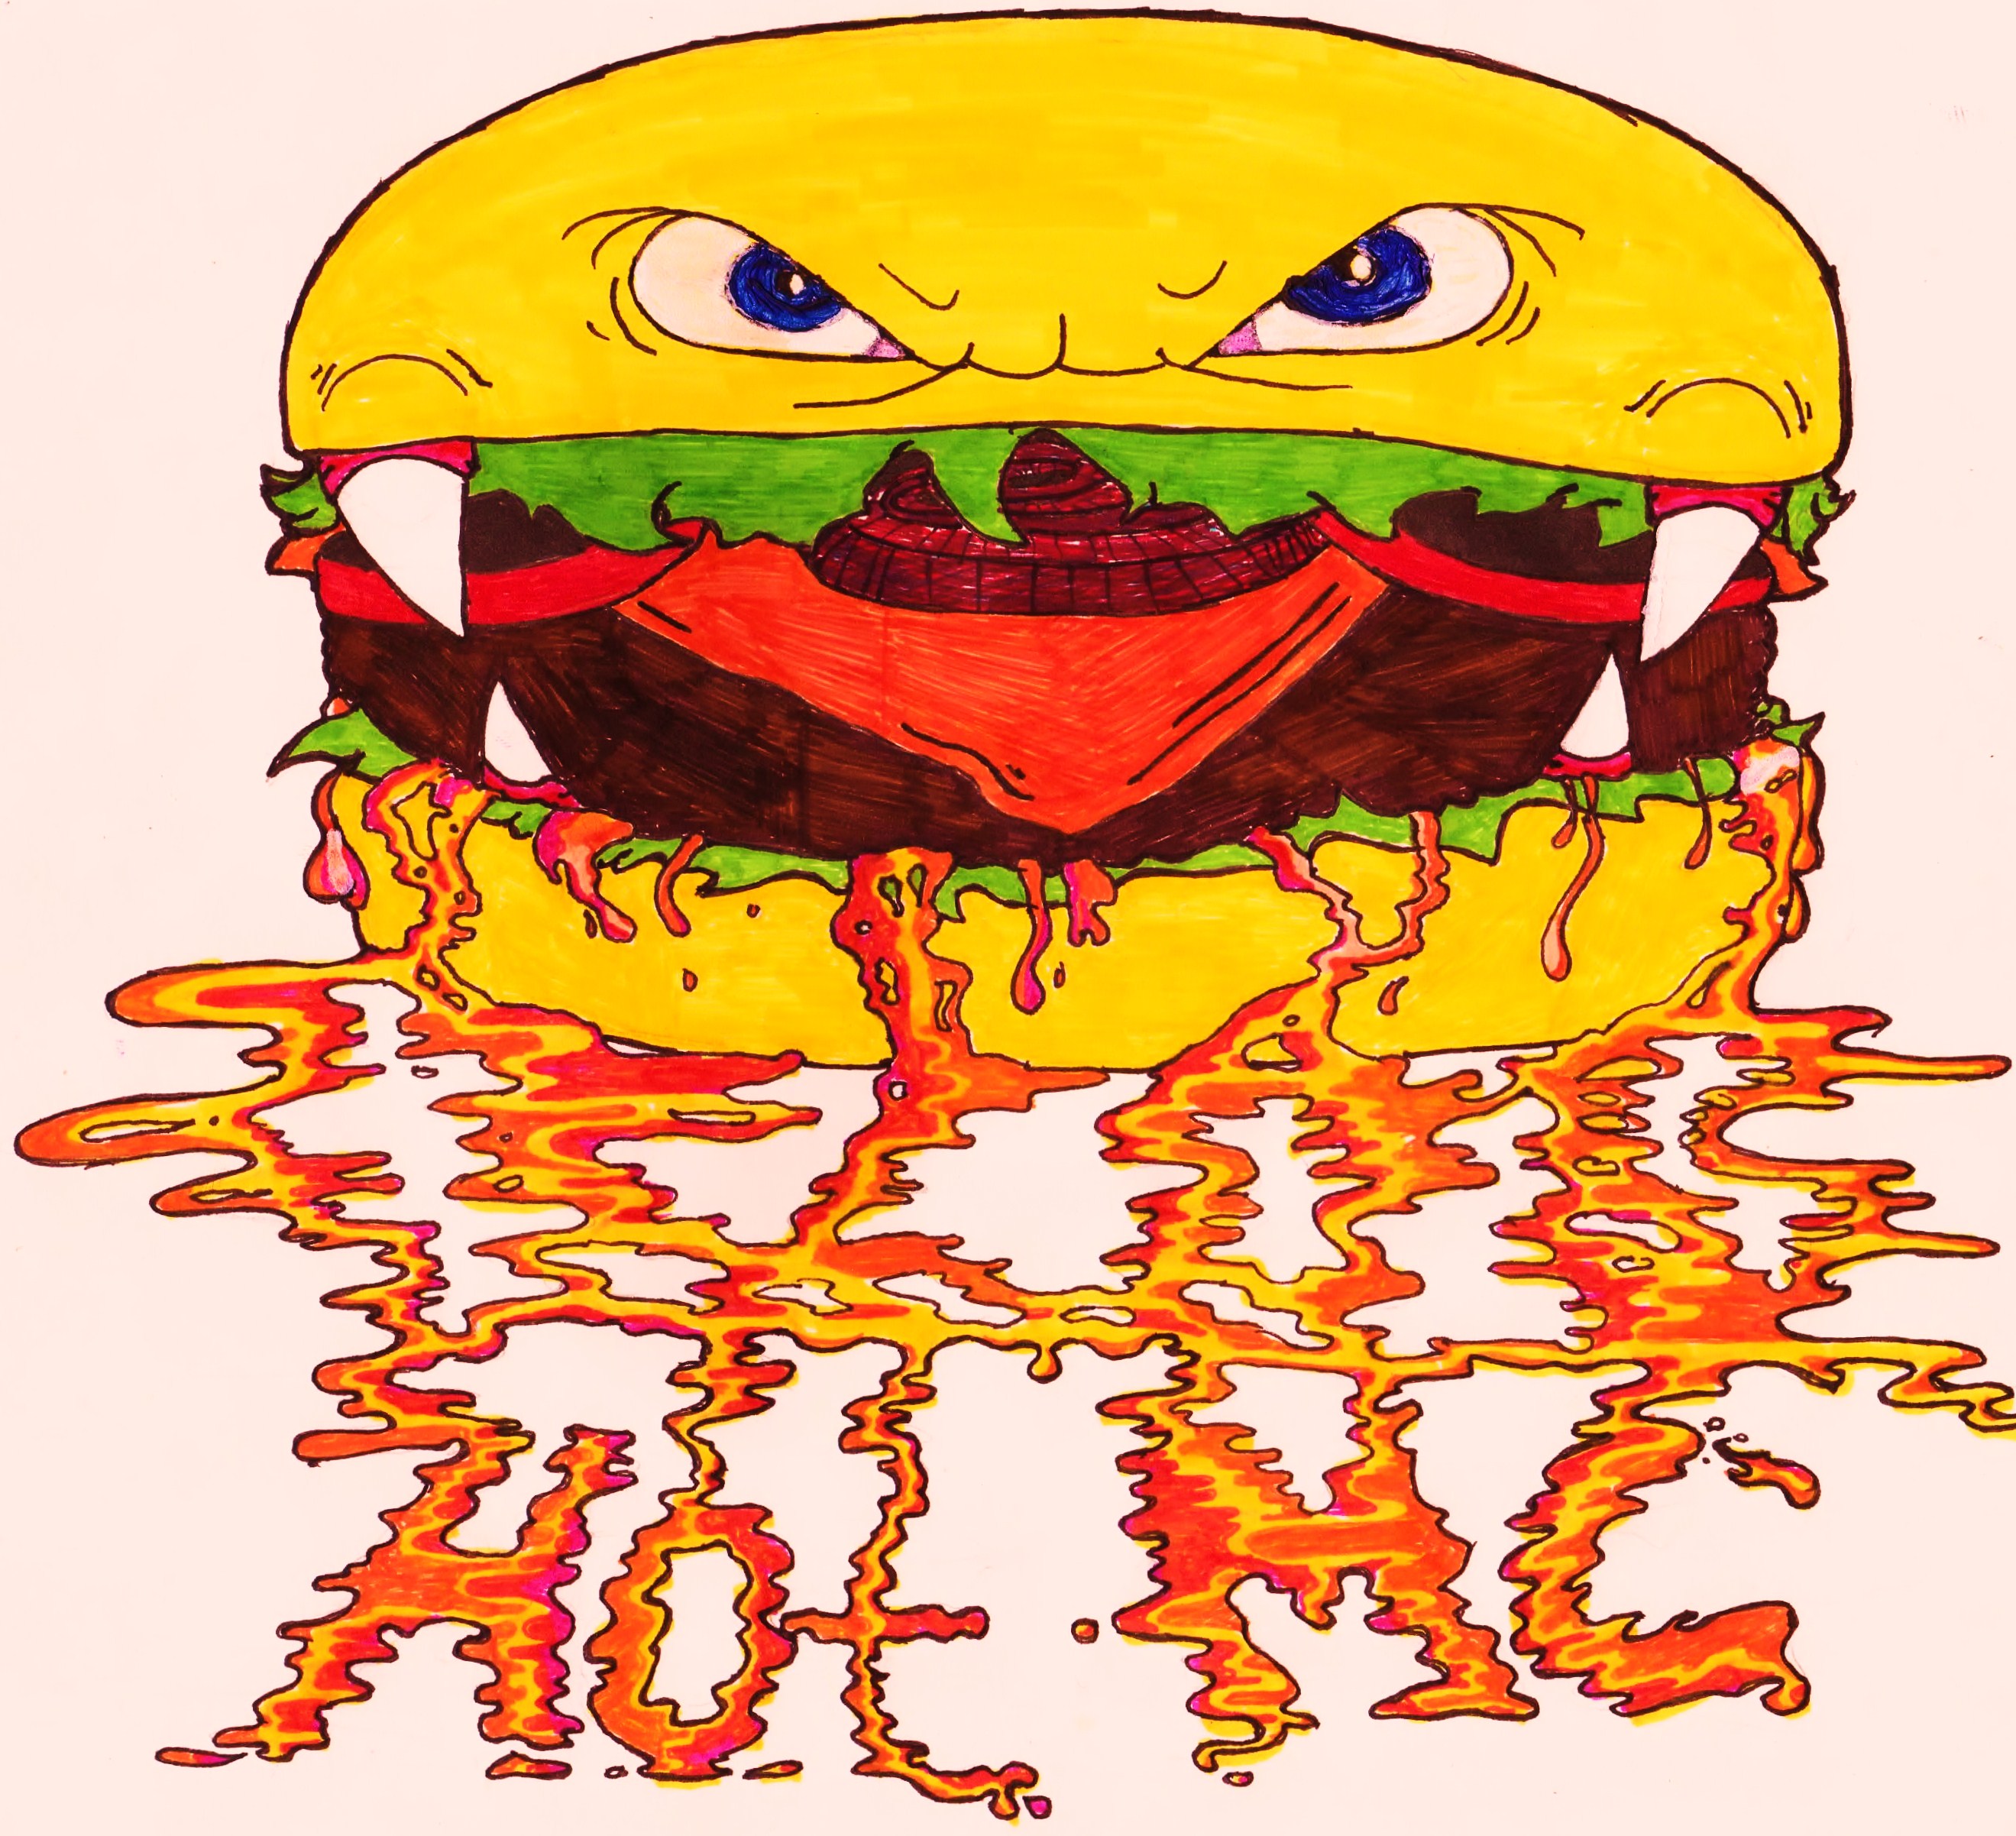 Evil Burger